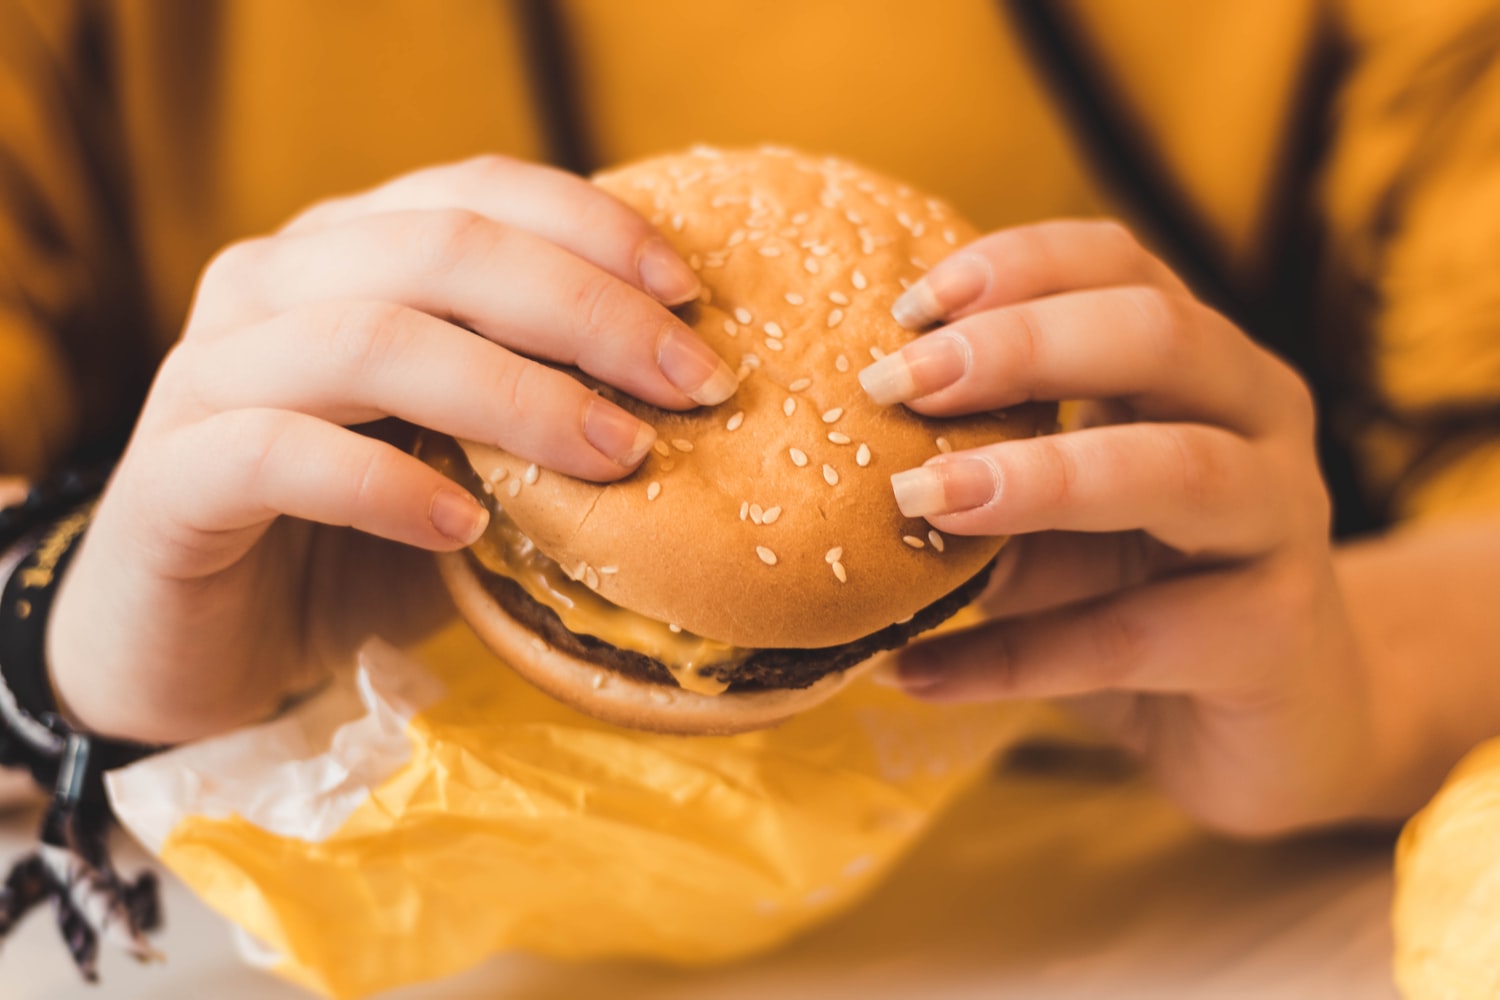 Da li su Burger King i McDonald's konačno zakopali ratne sekire?